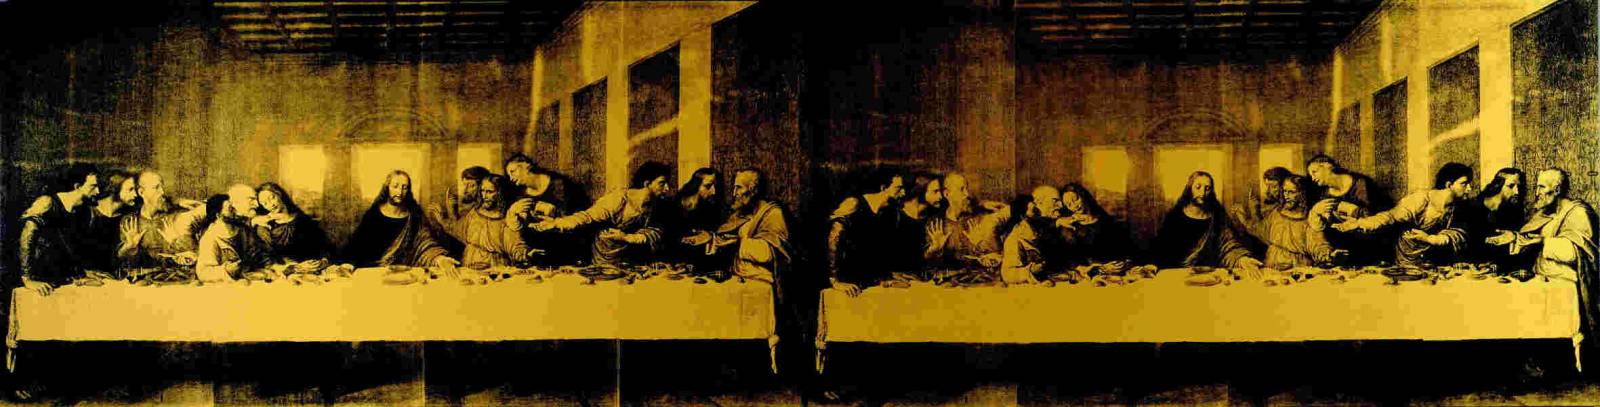 Andy Warhol_Last soupper